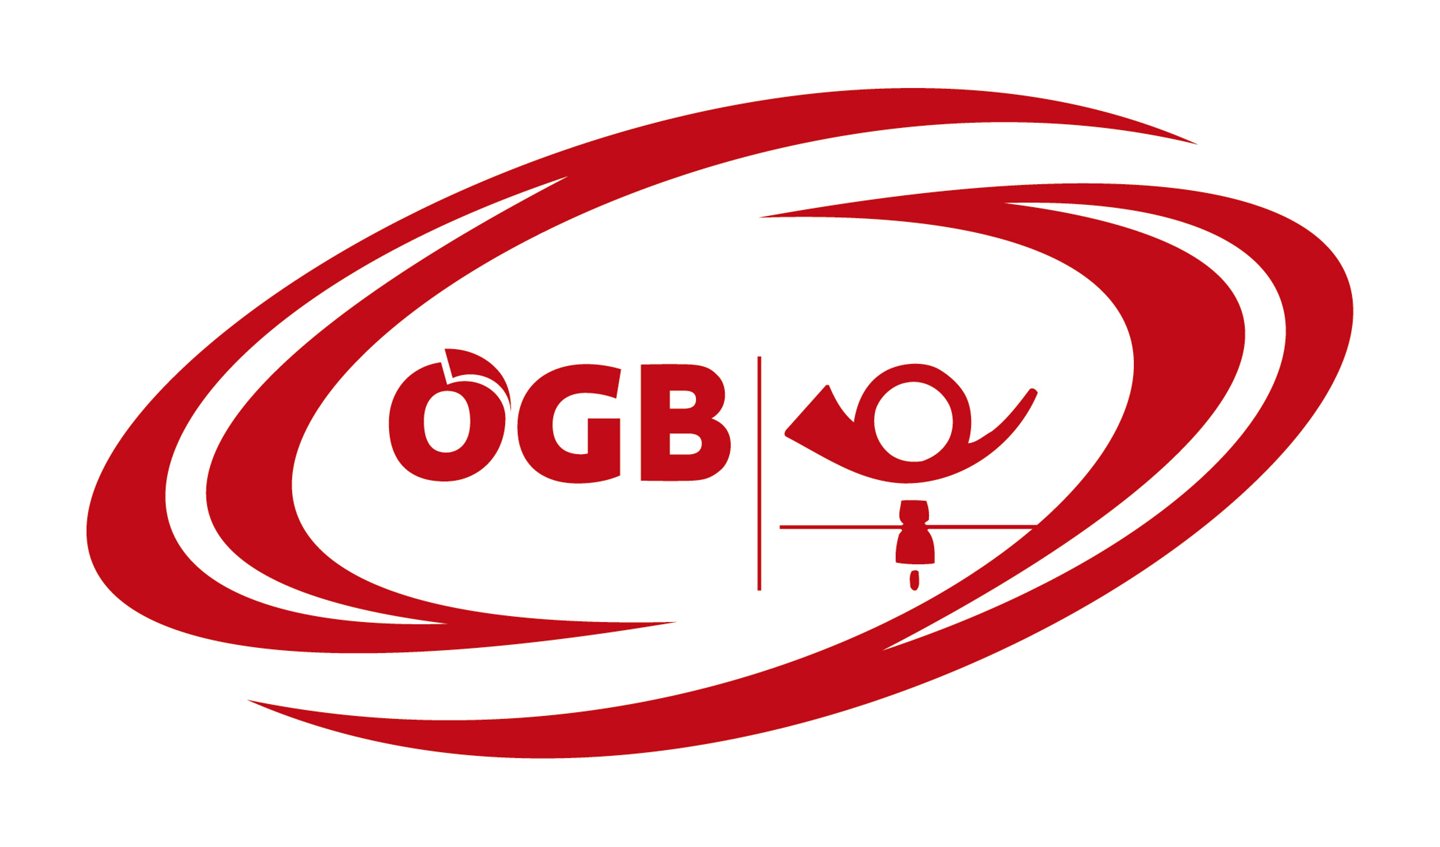 GPF-Logo